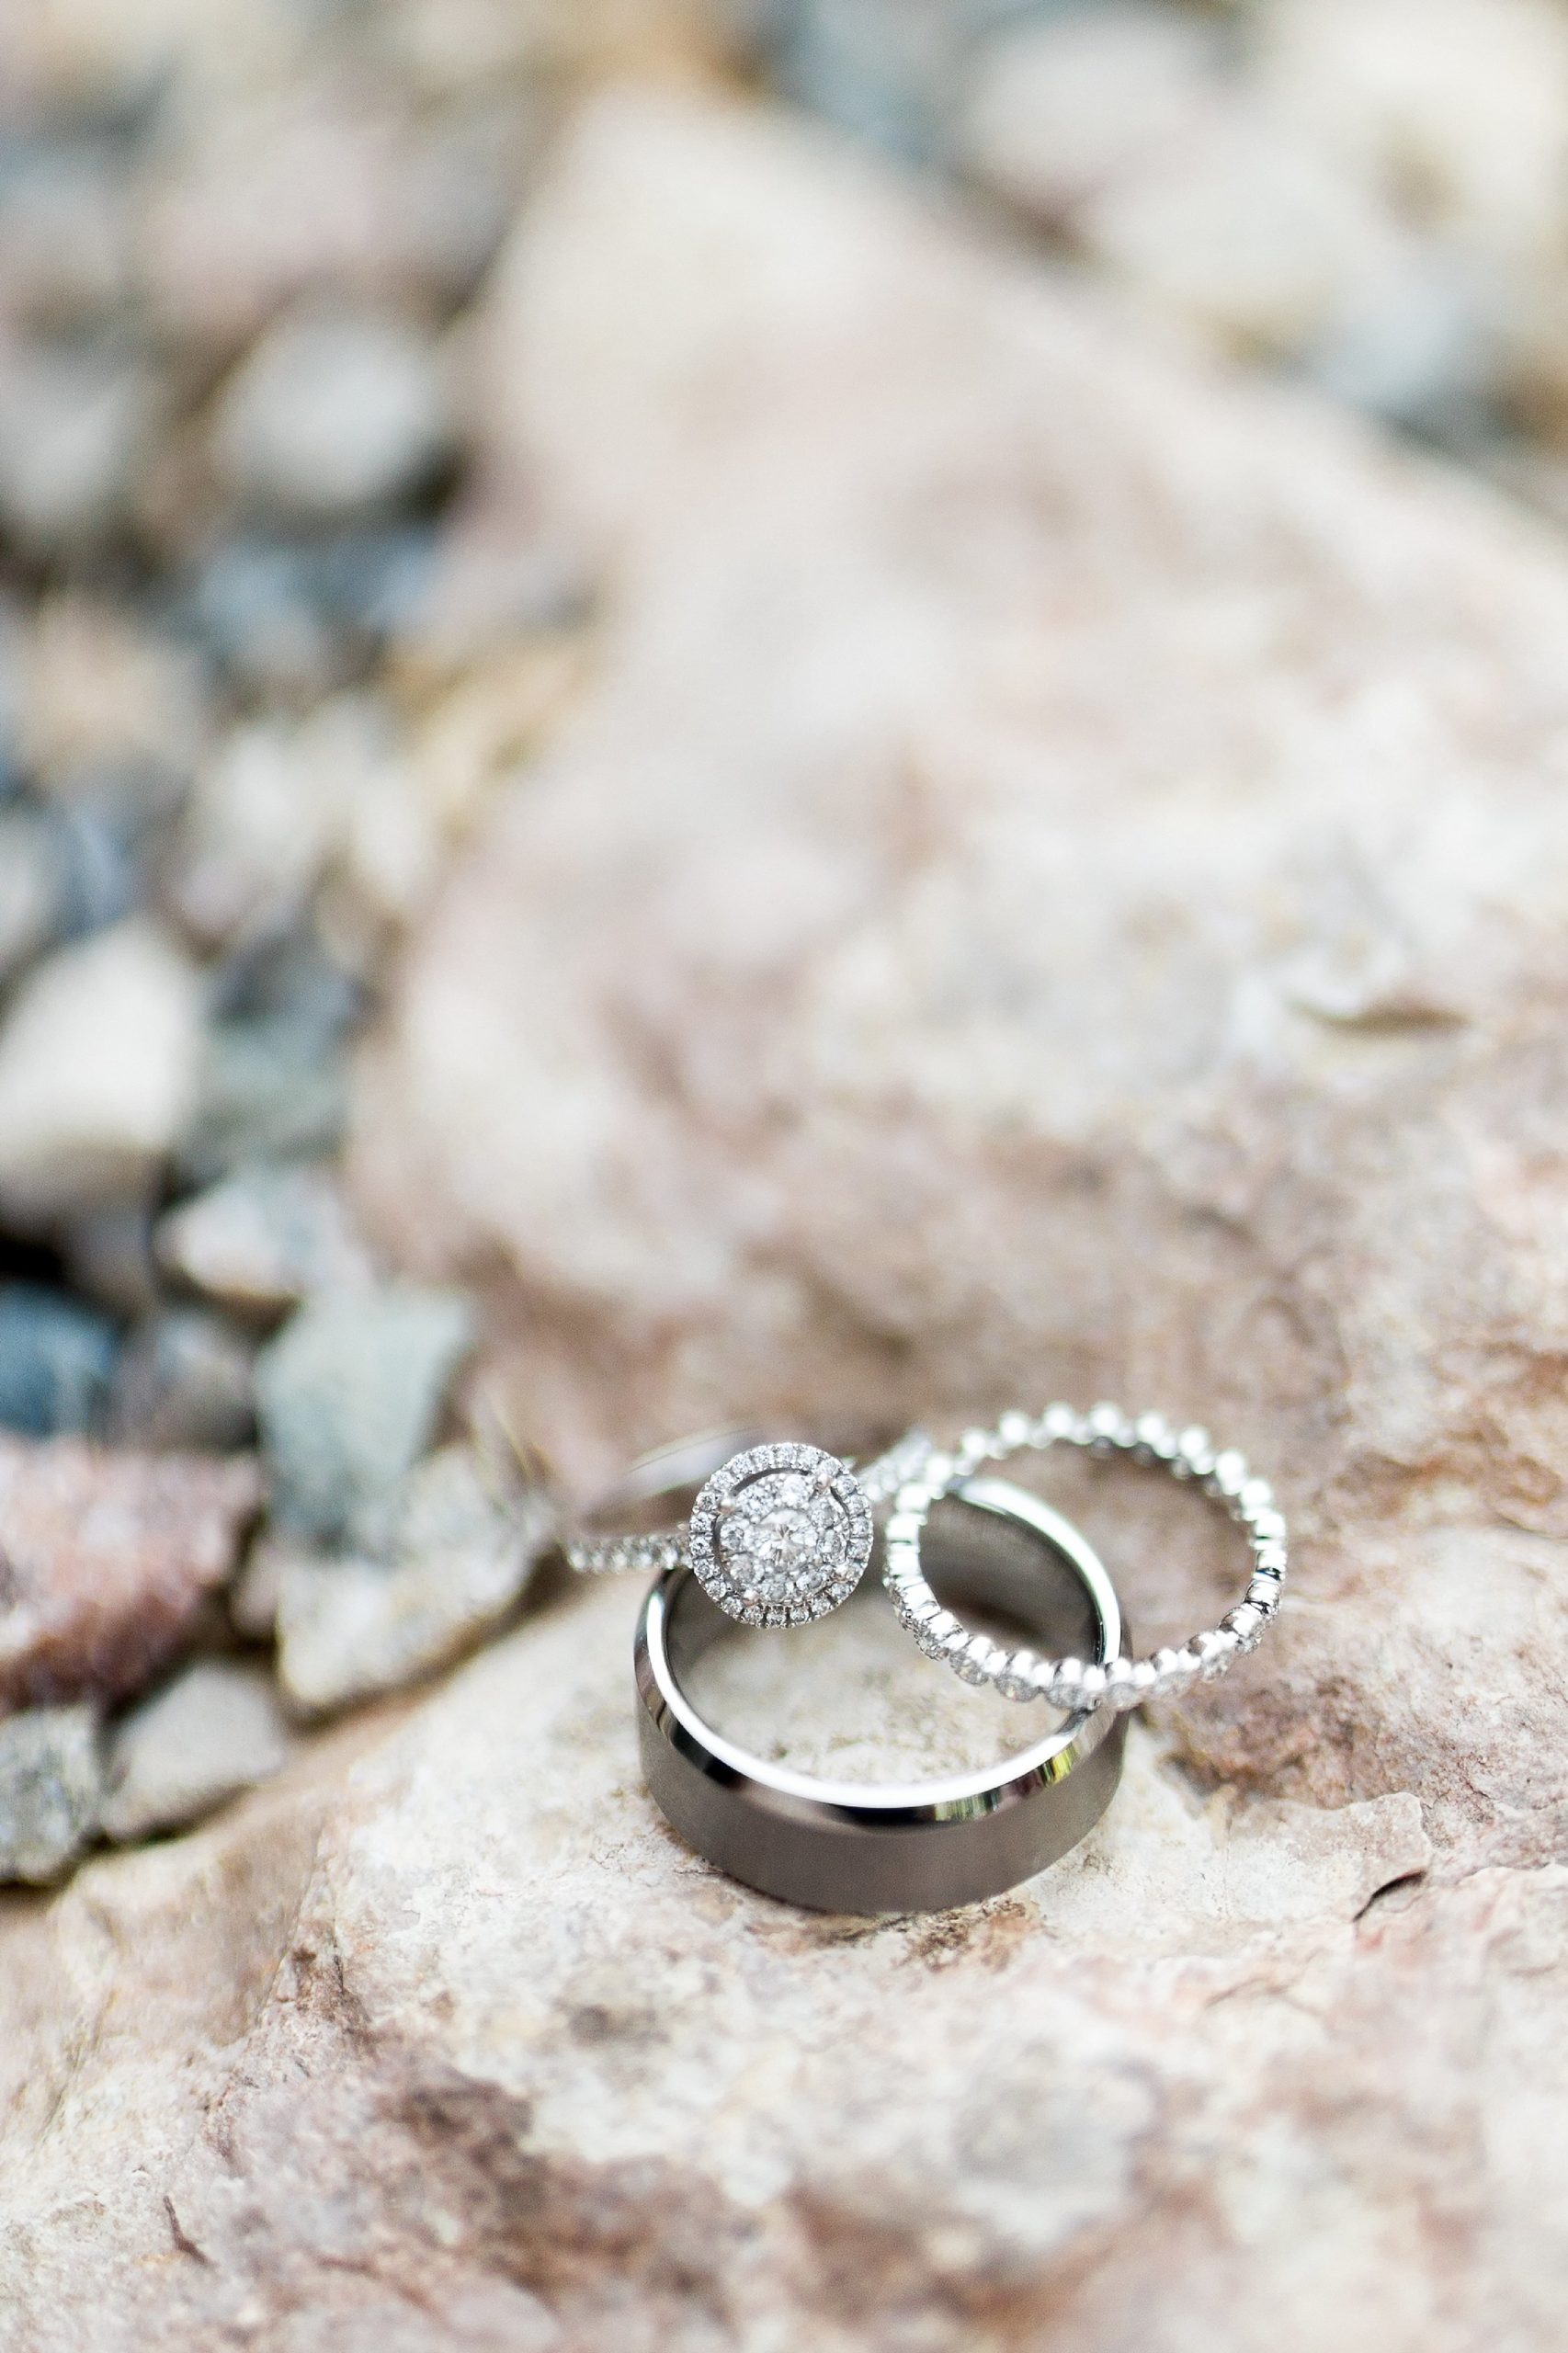 Wedding ring detail photos - Simple Wedding details - Winnipeg Wedding Photographer - Keila Marie Photography